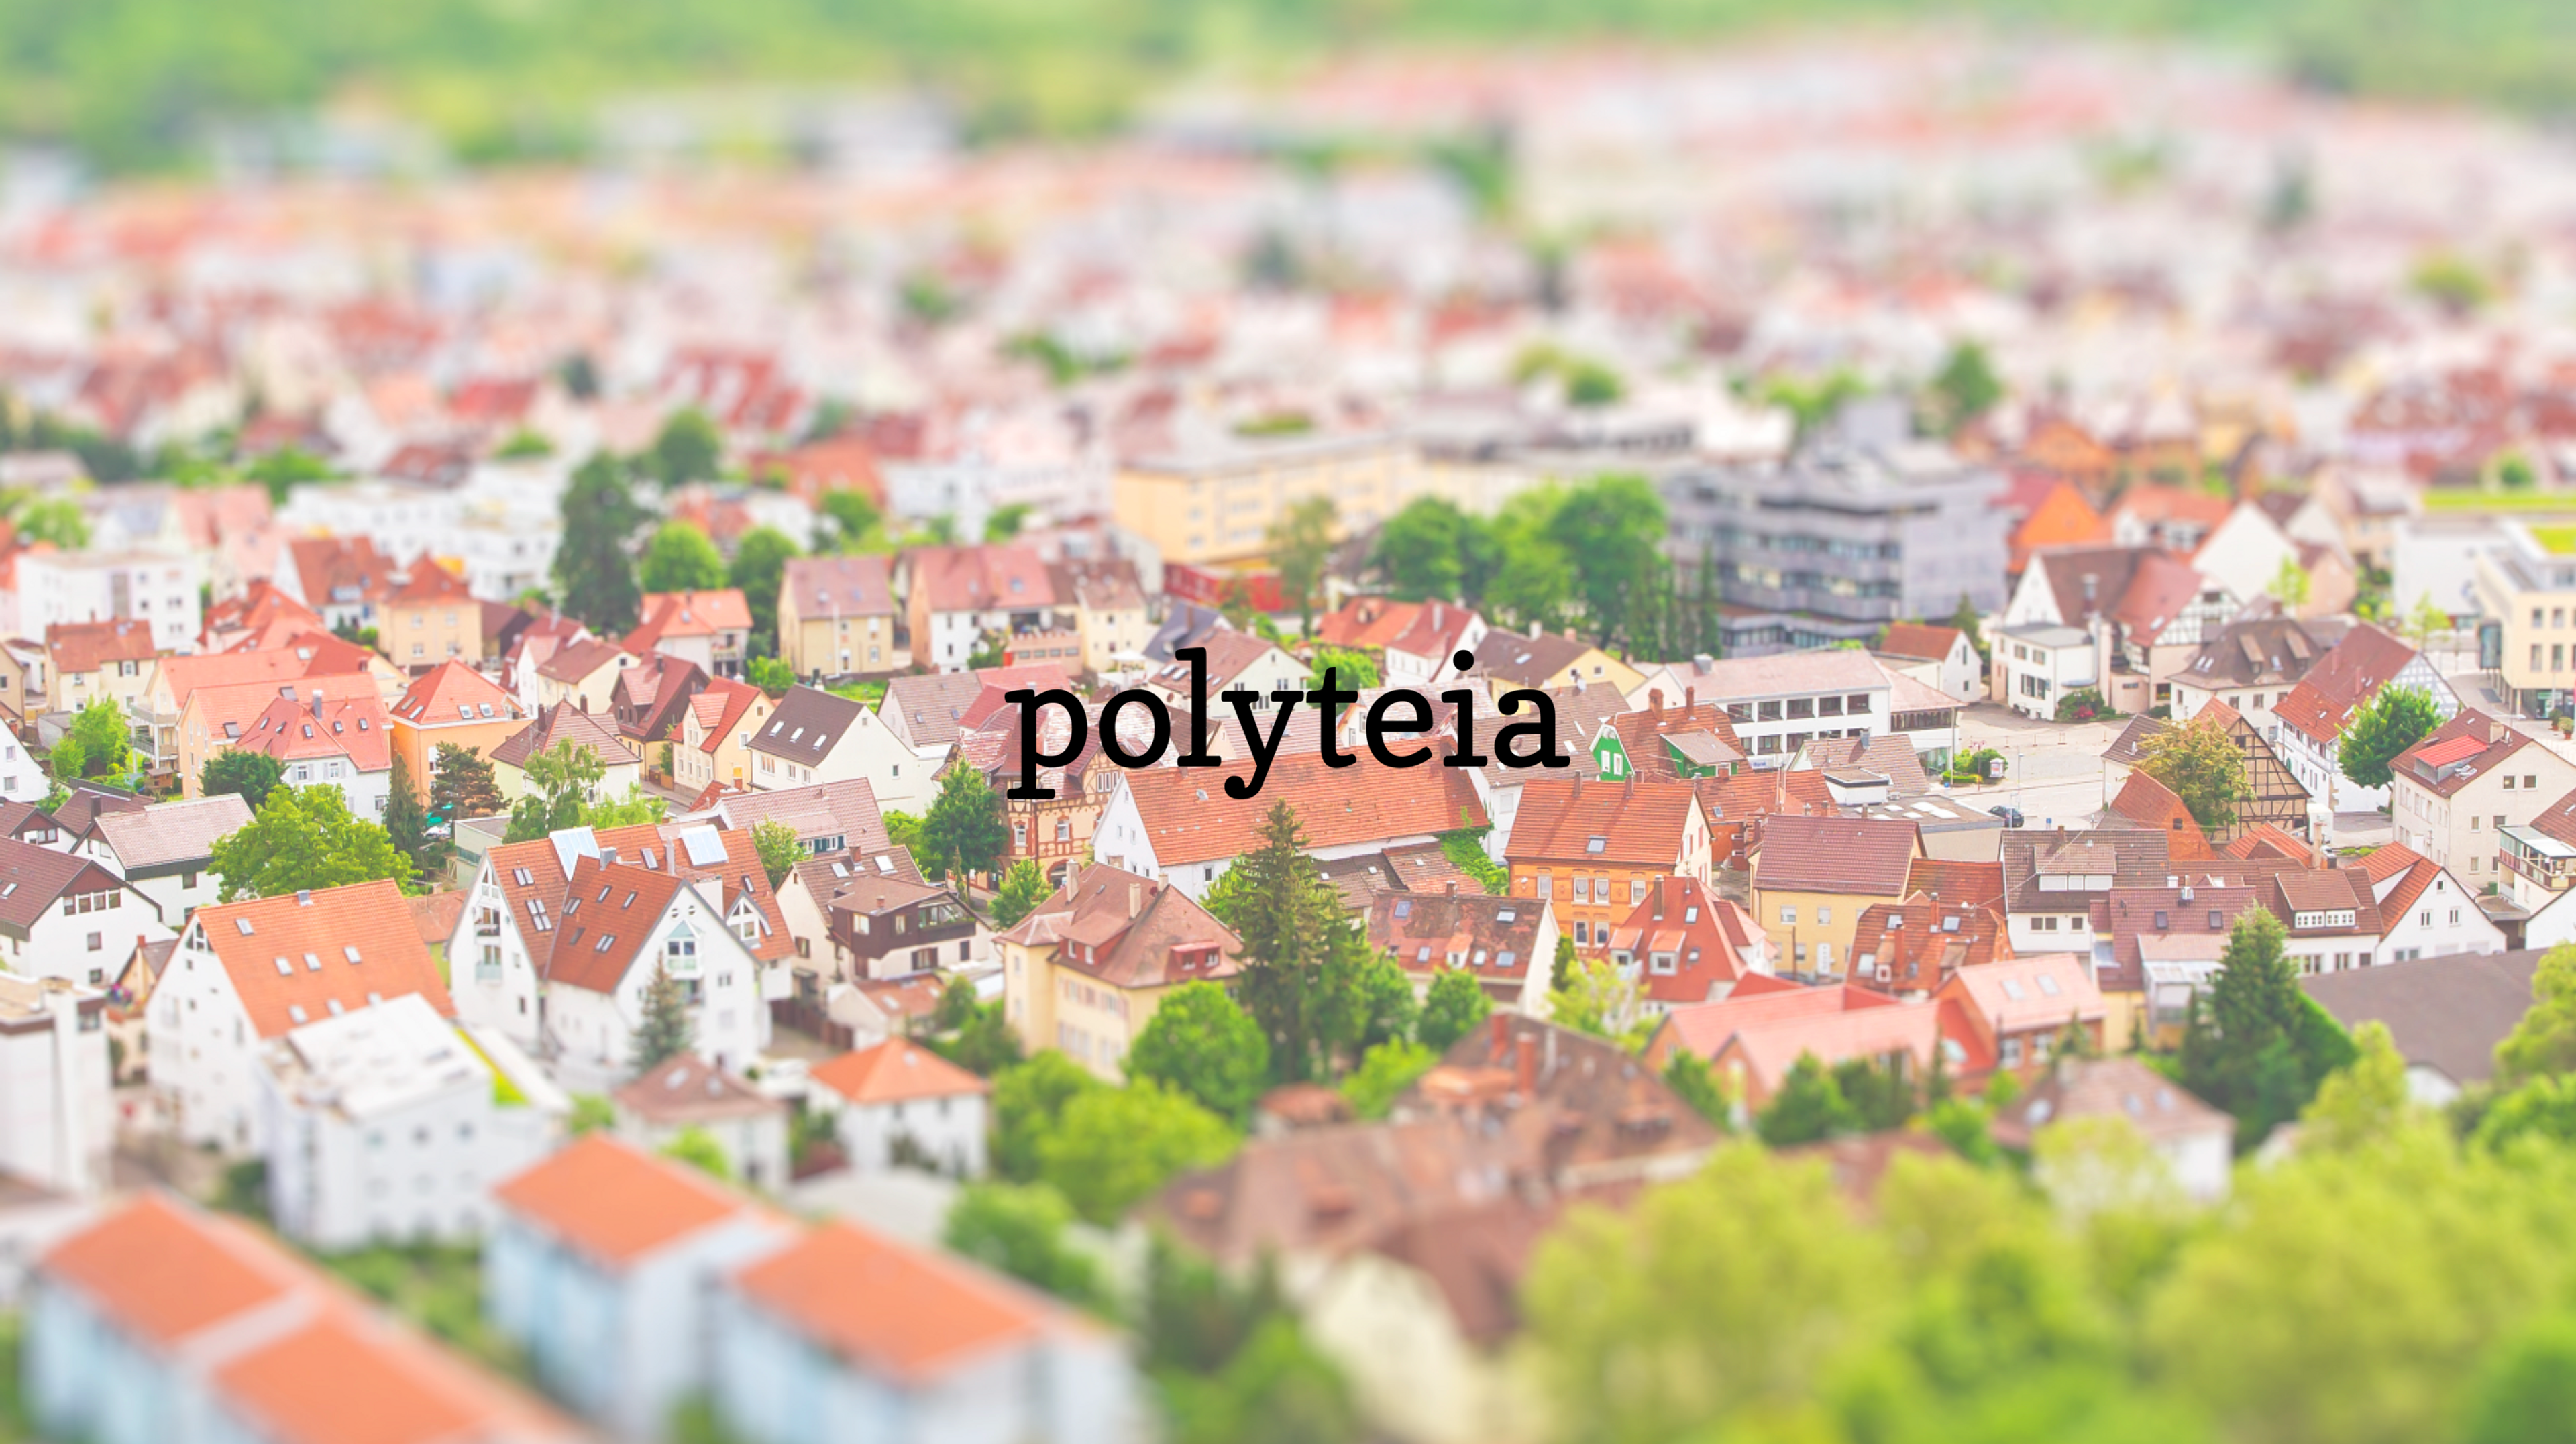 Polyteia & Circula: a success story